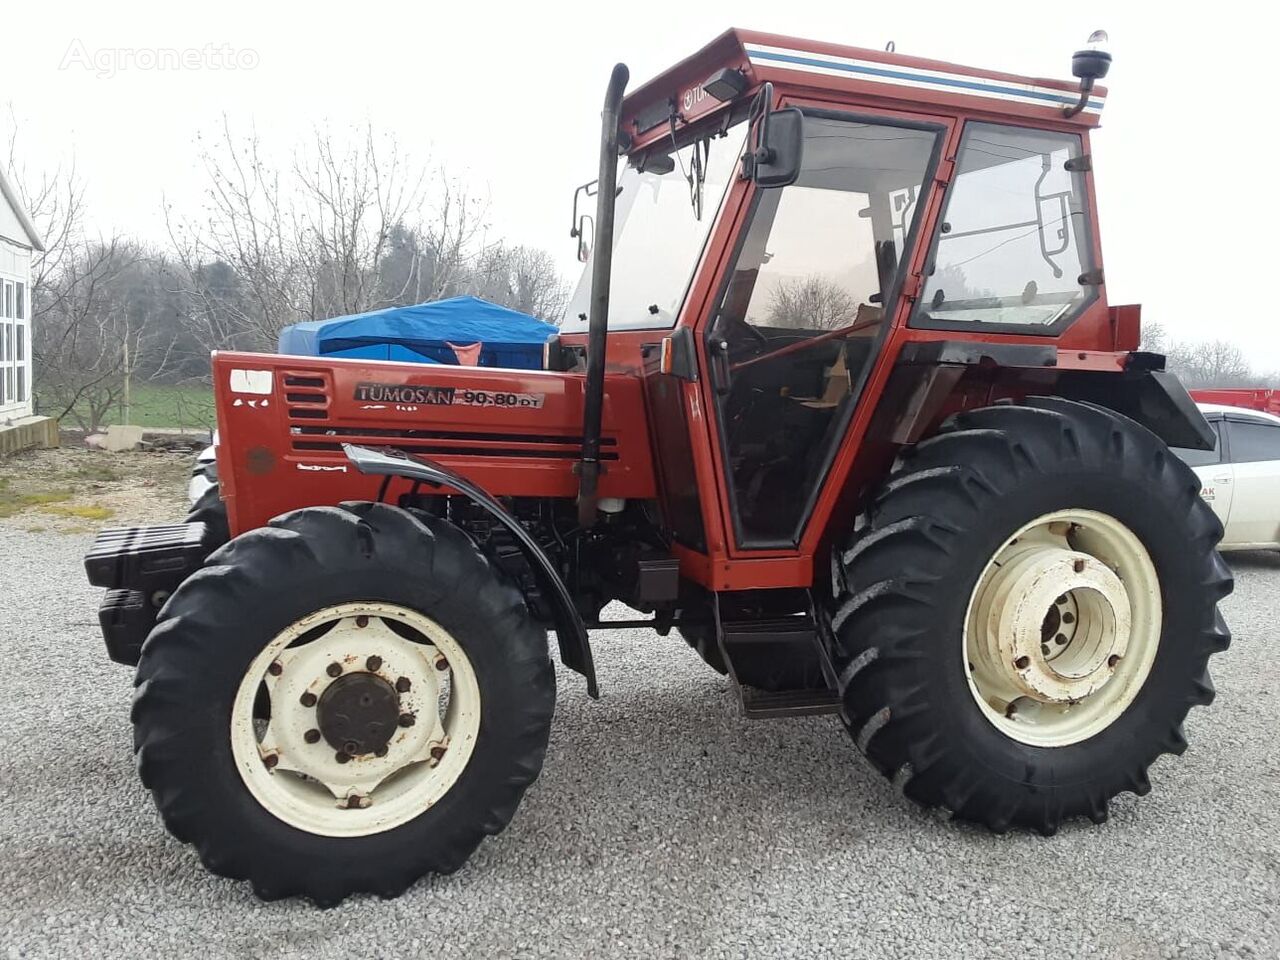 Tümosan 90.80 4X4 mini tractor